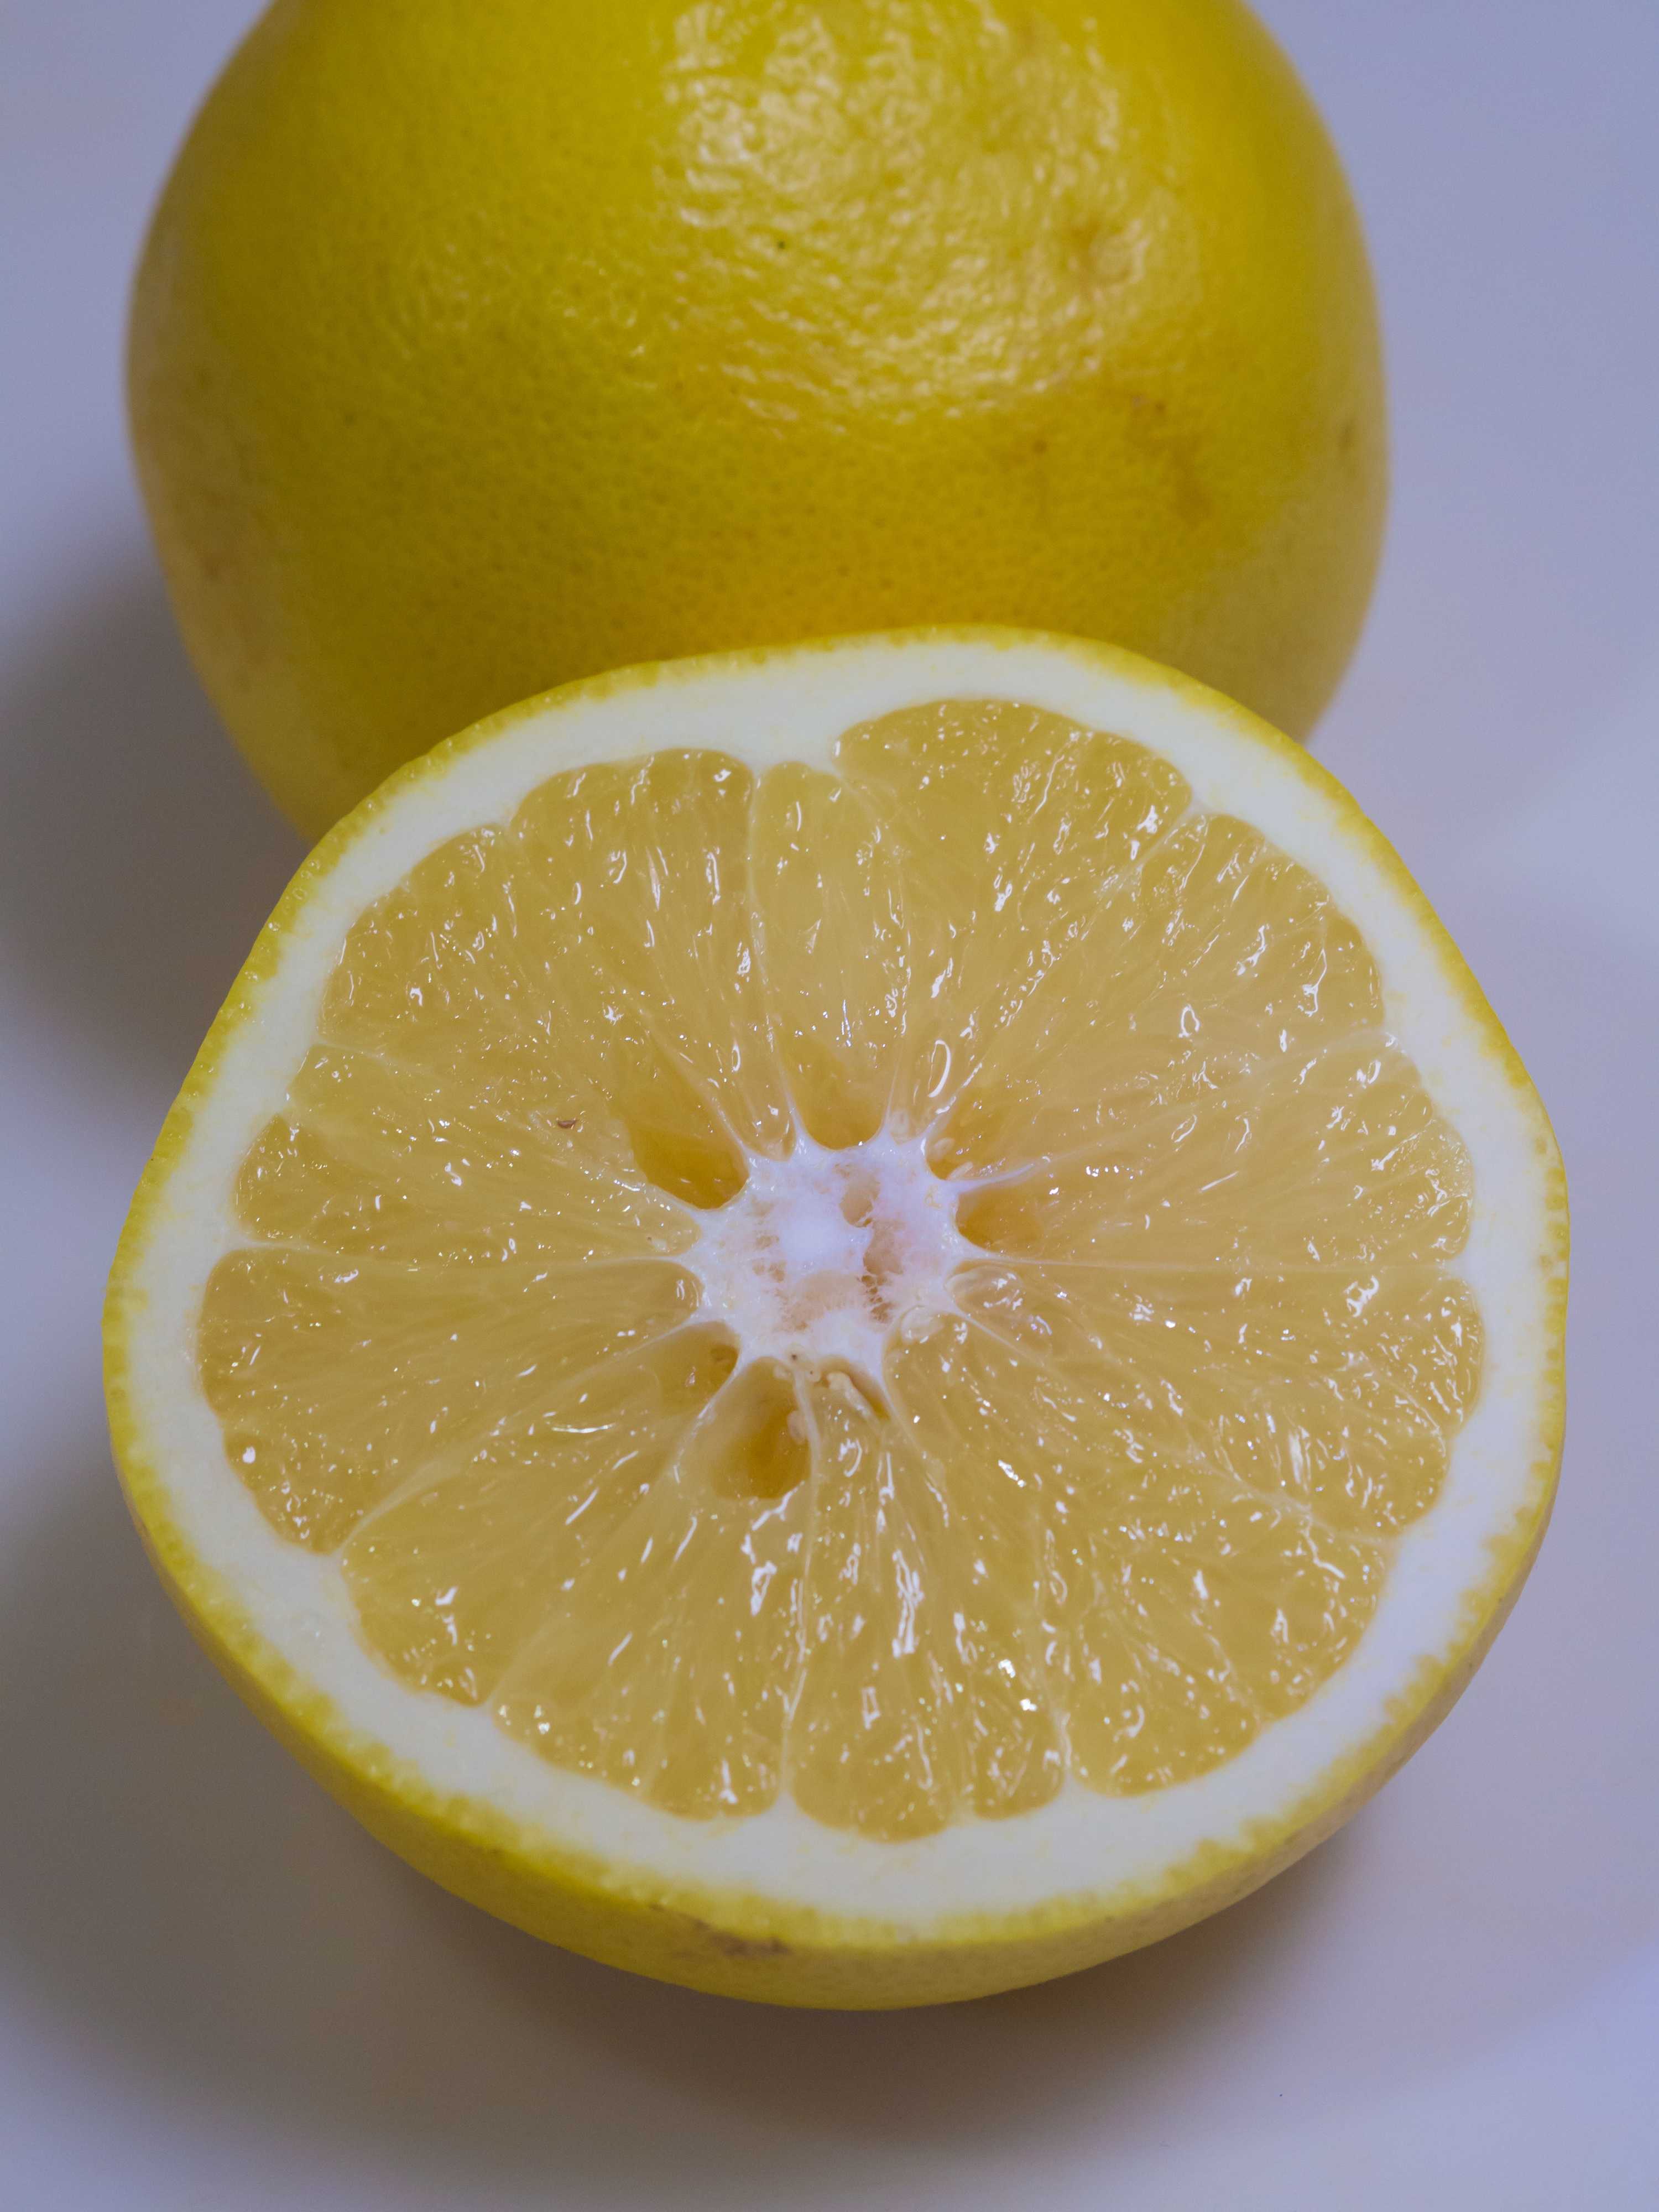 Померанец лимон